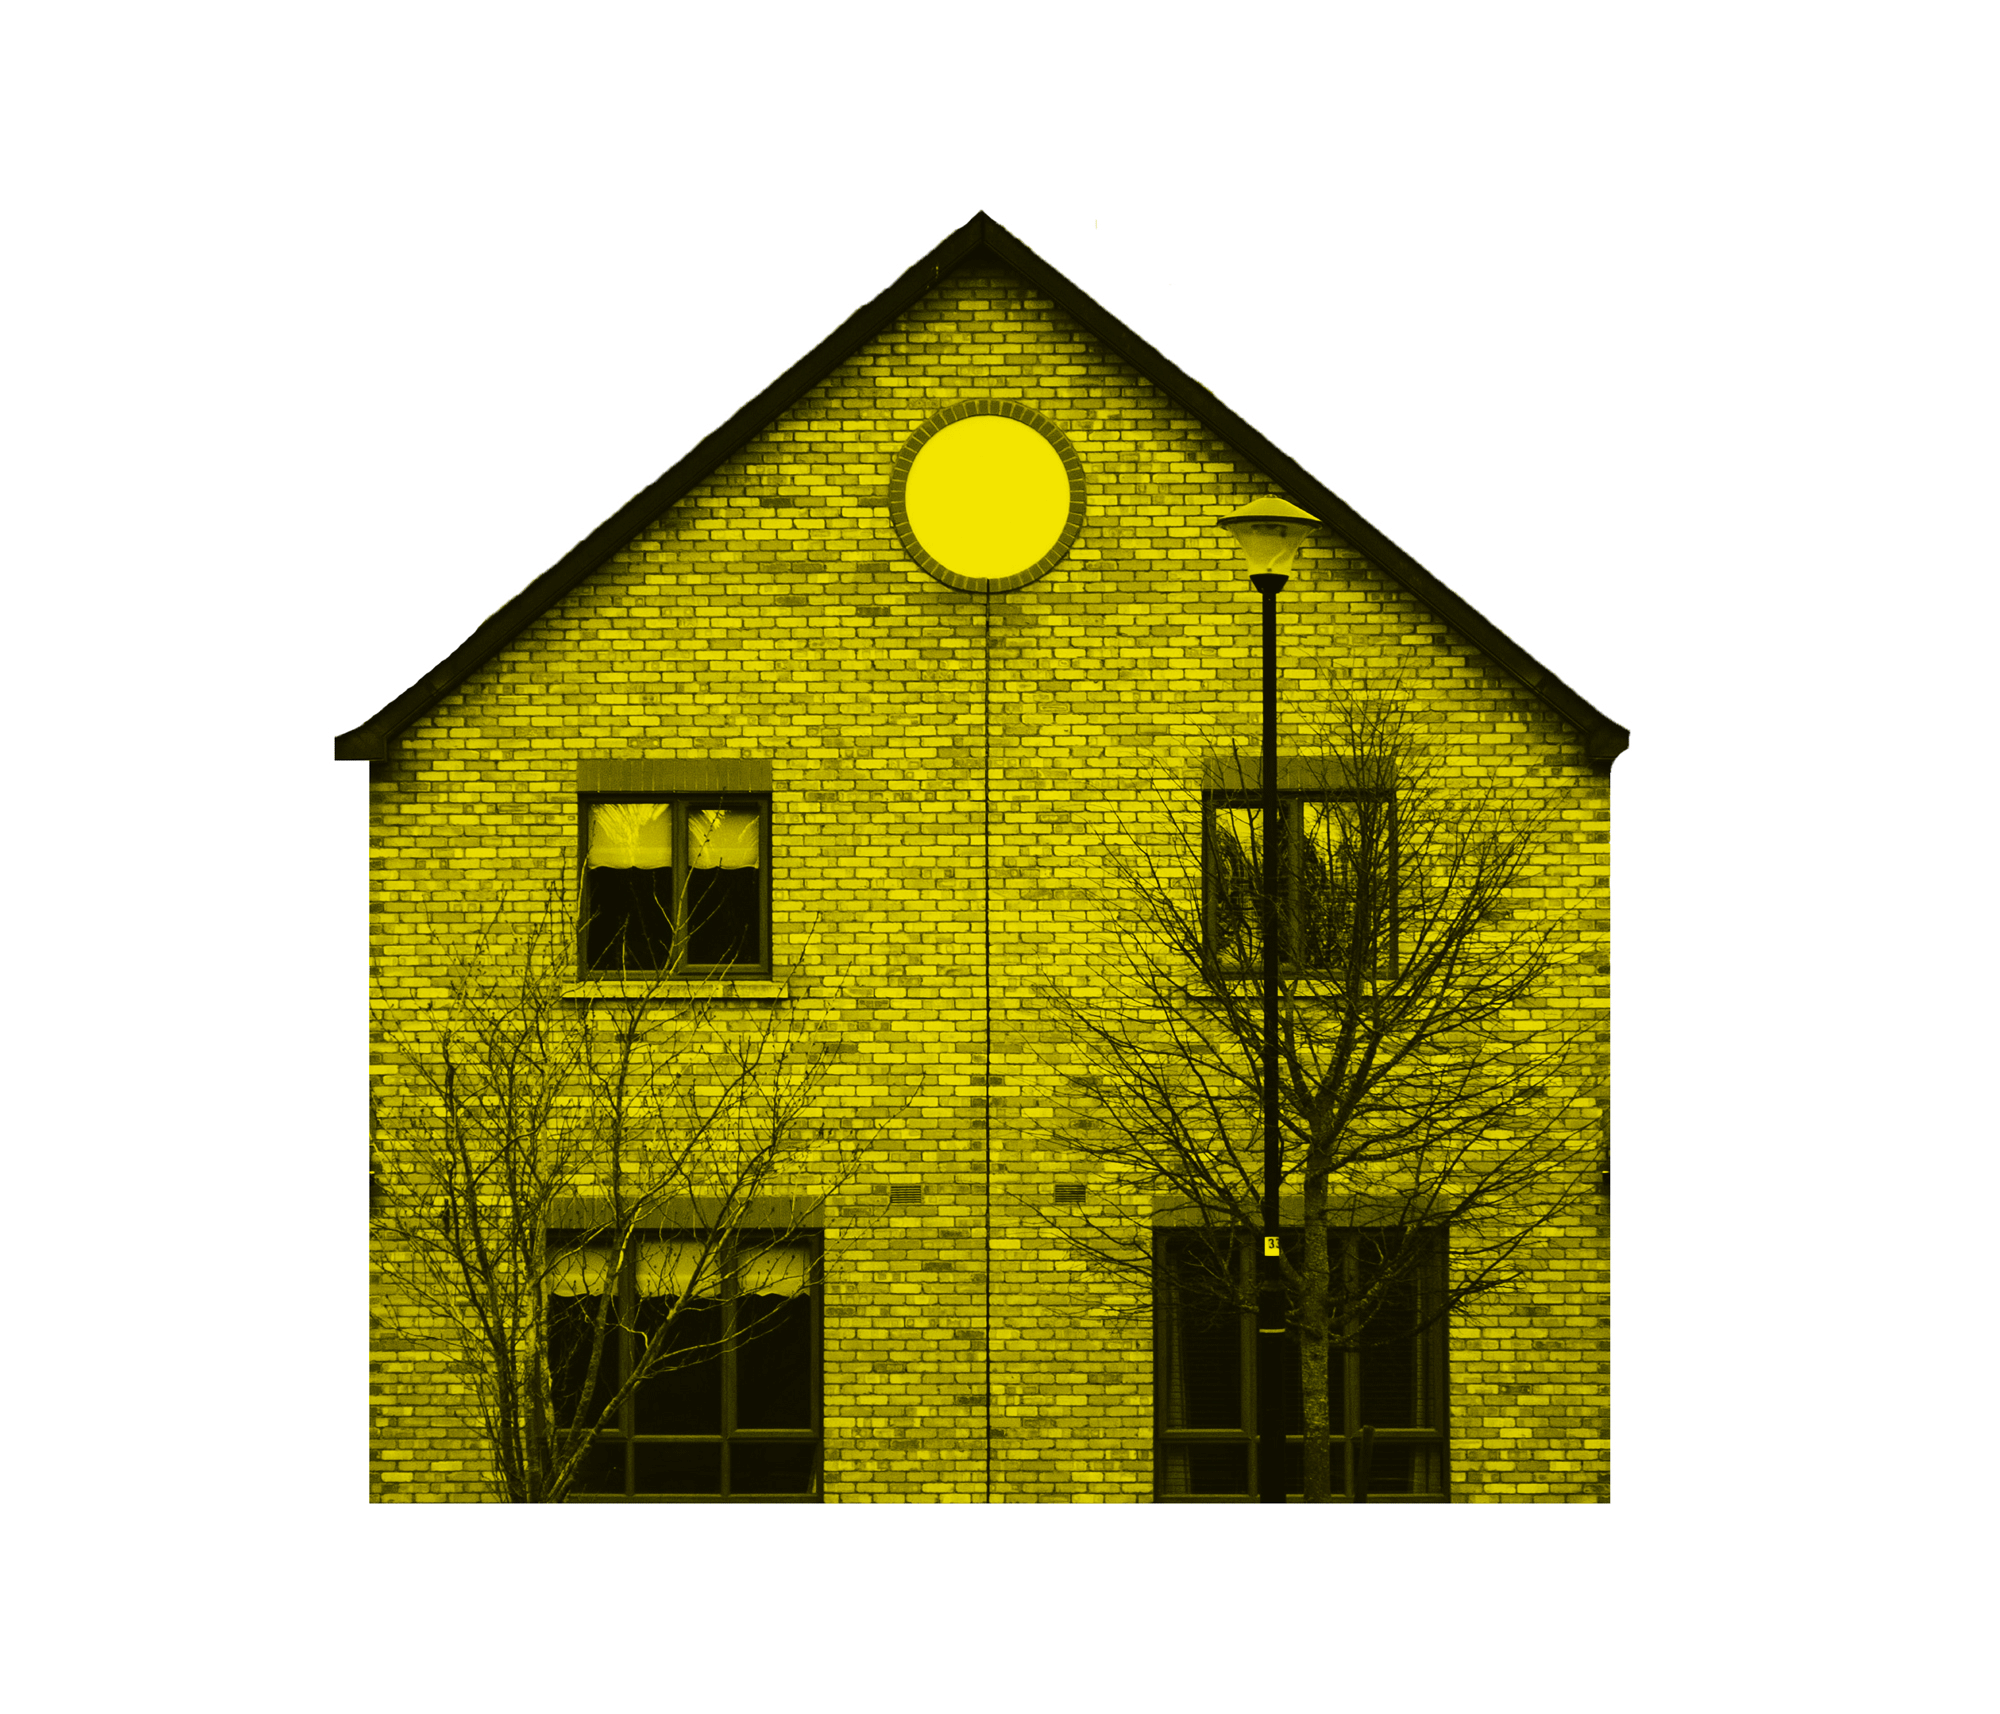 Irene Camera  (Graphic Designer) - Uncommon Houses